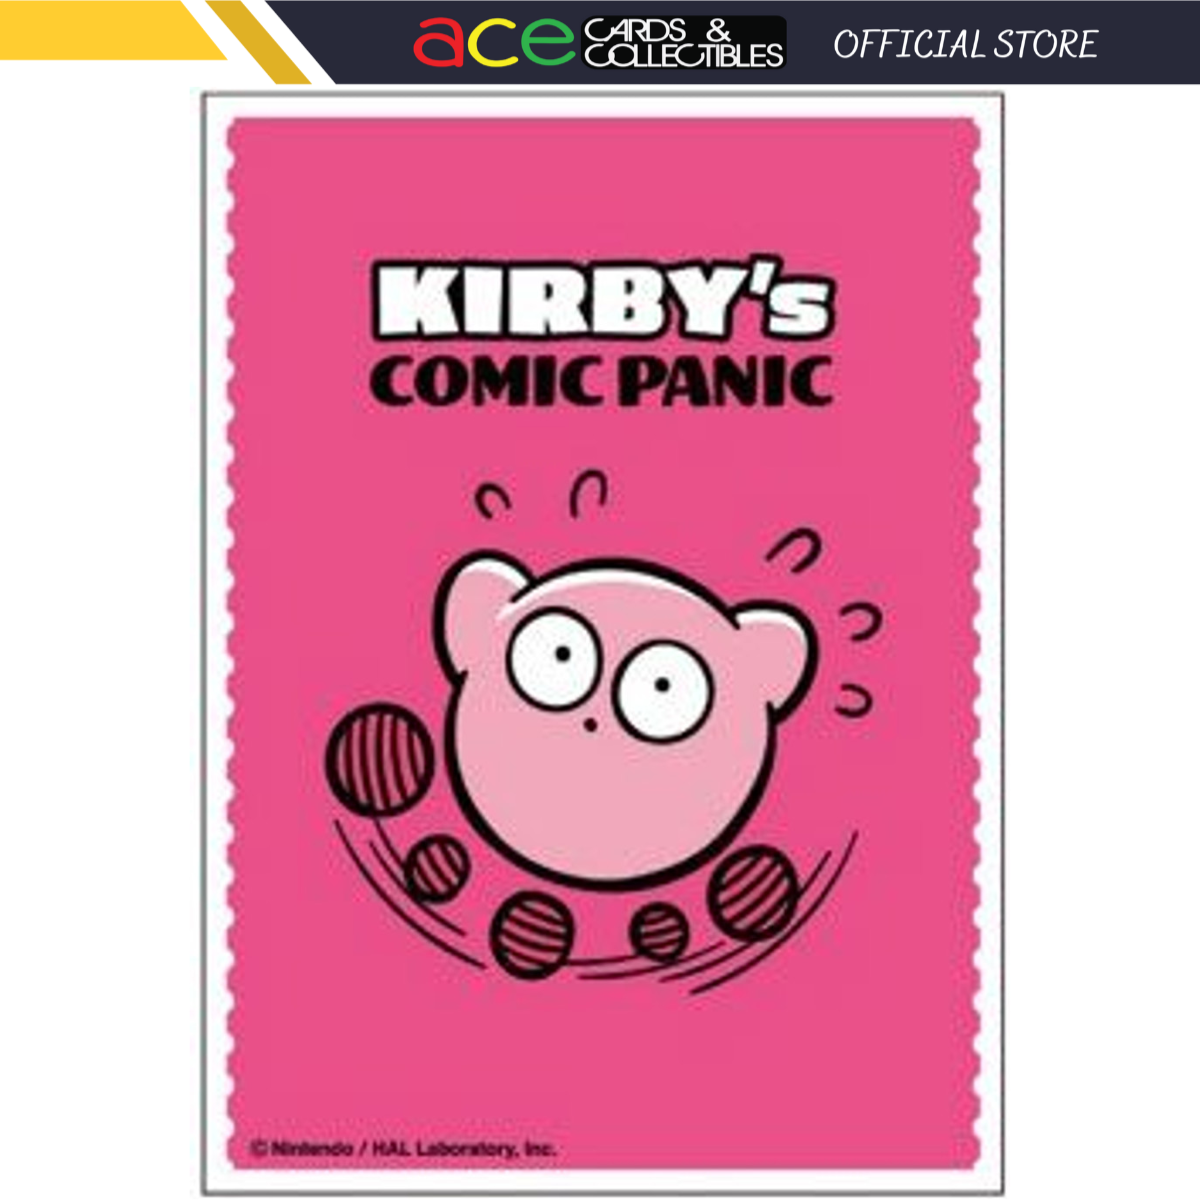 Ensky Character Sleeve - Kirby Horoscope "Awateru Kirby" [EN-1227]-Ensky-Ace Cards & Collectibles